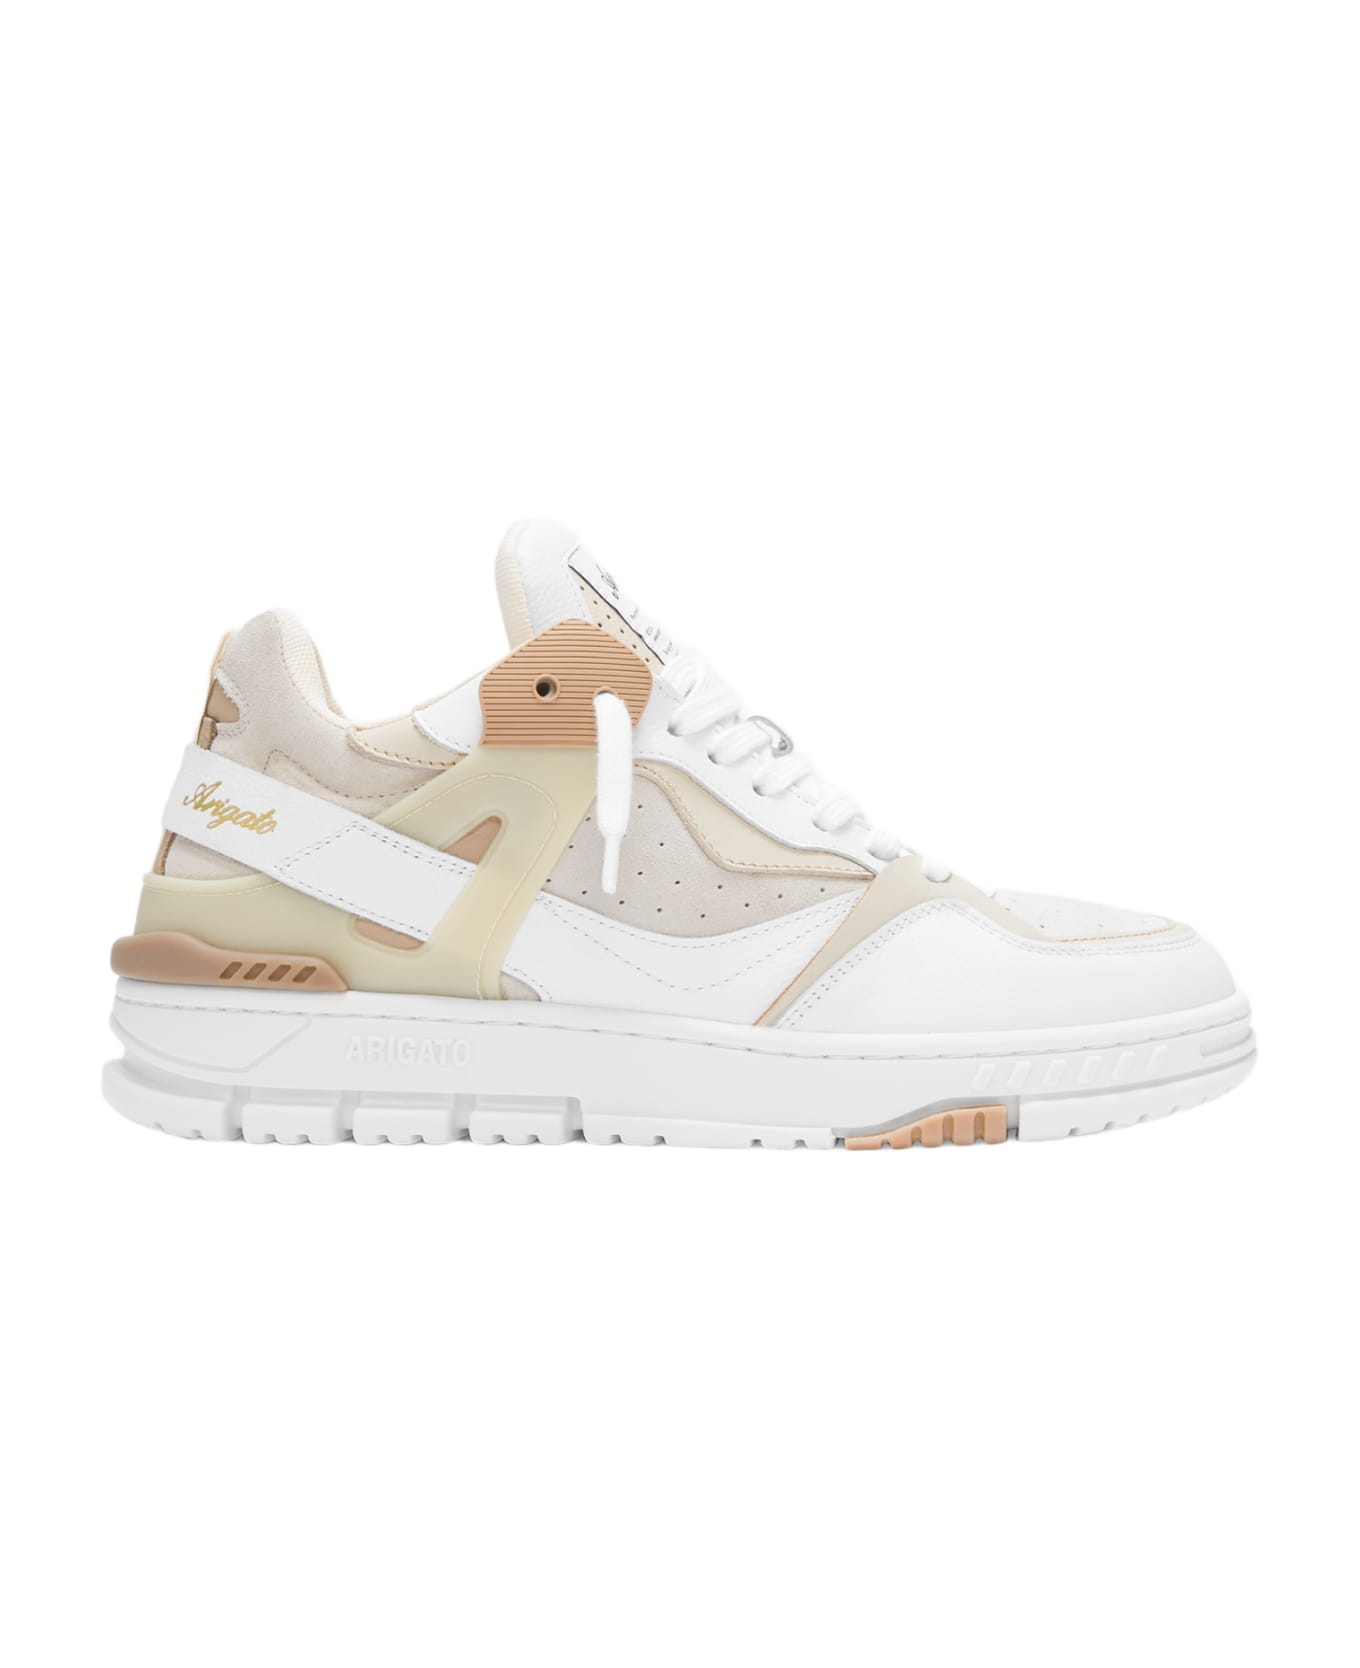 Axel Arigato Astro Sneaker White and beige leather 90s style low sneaker - Astro Sneaker - Bianco/beige スニーカー